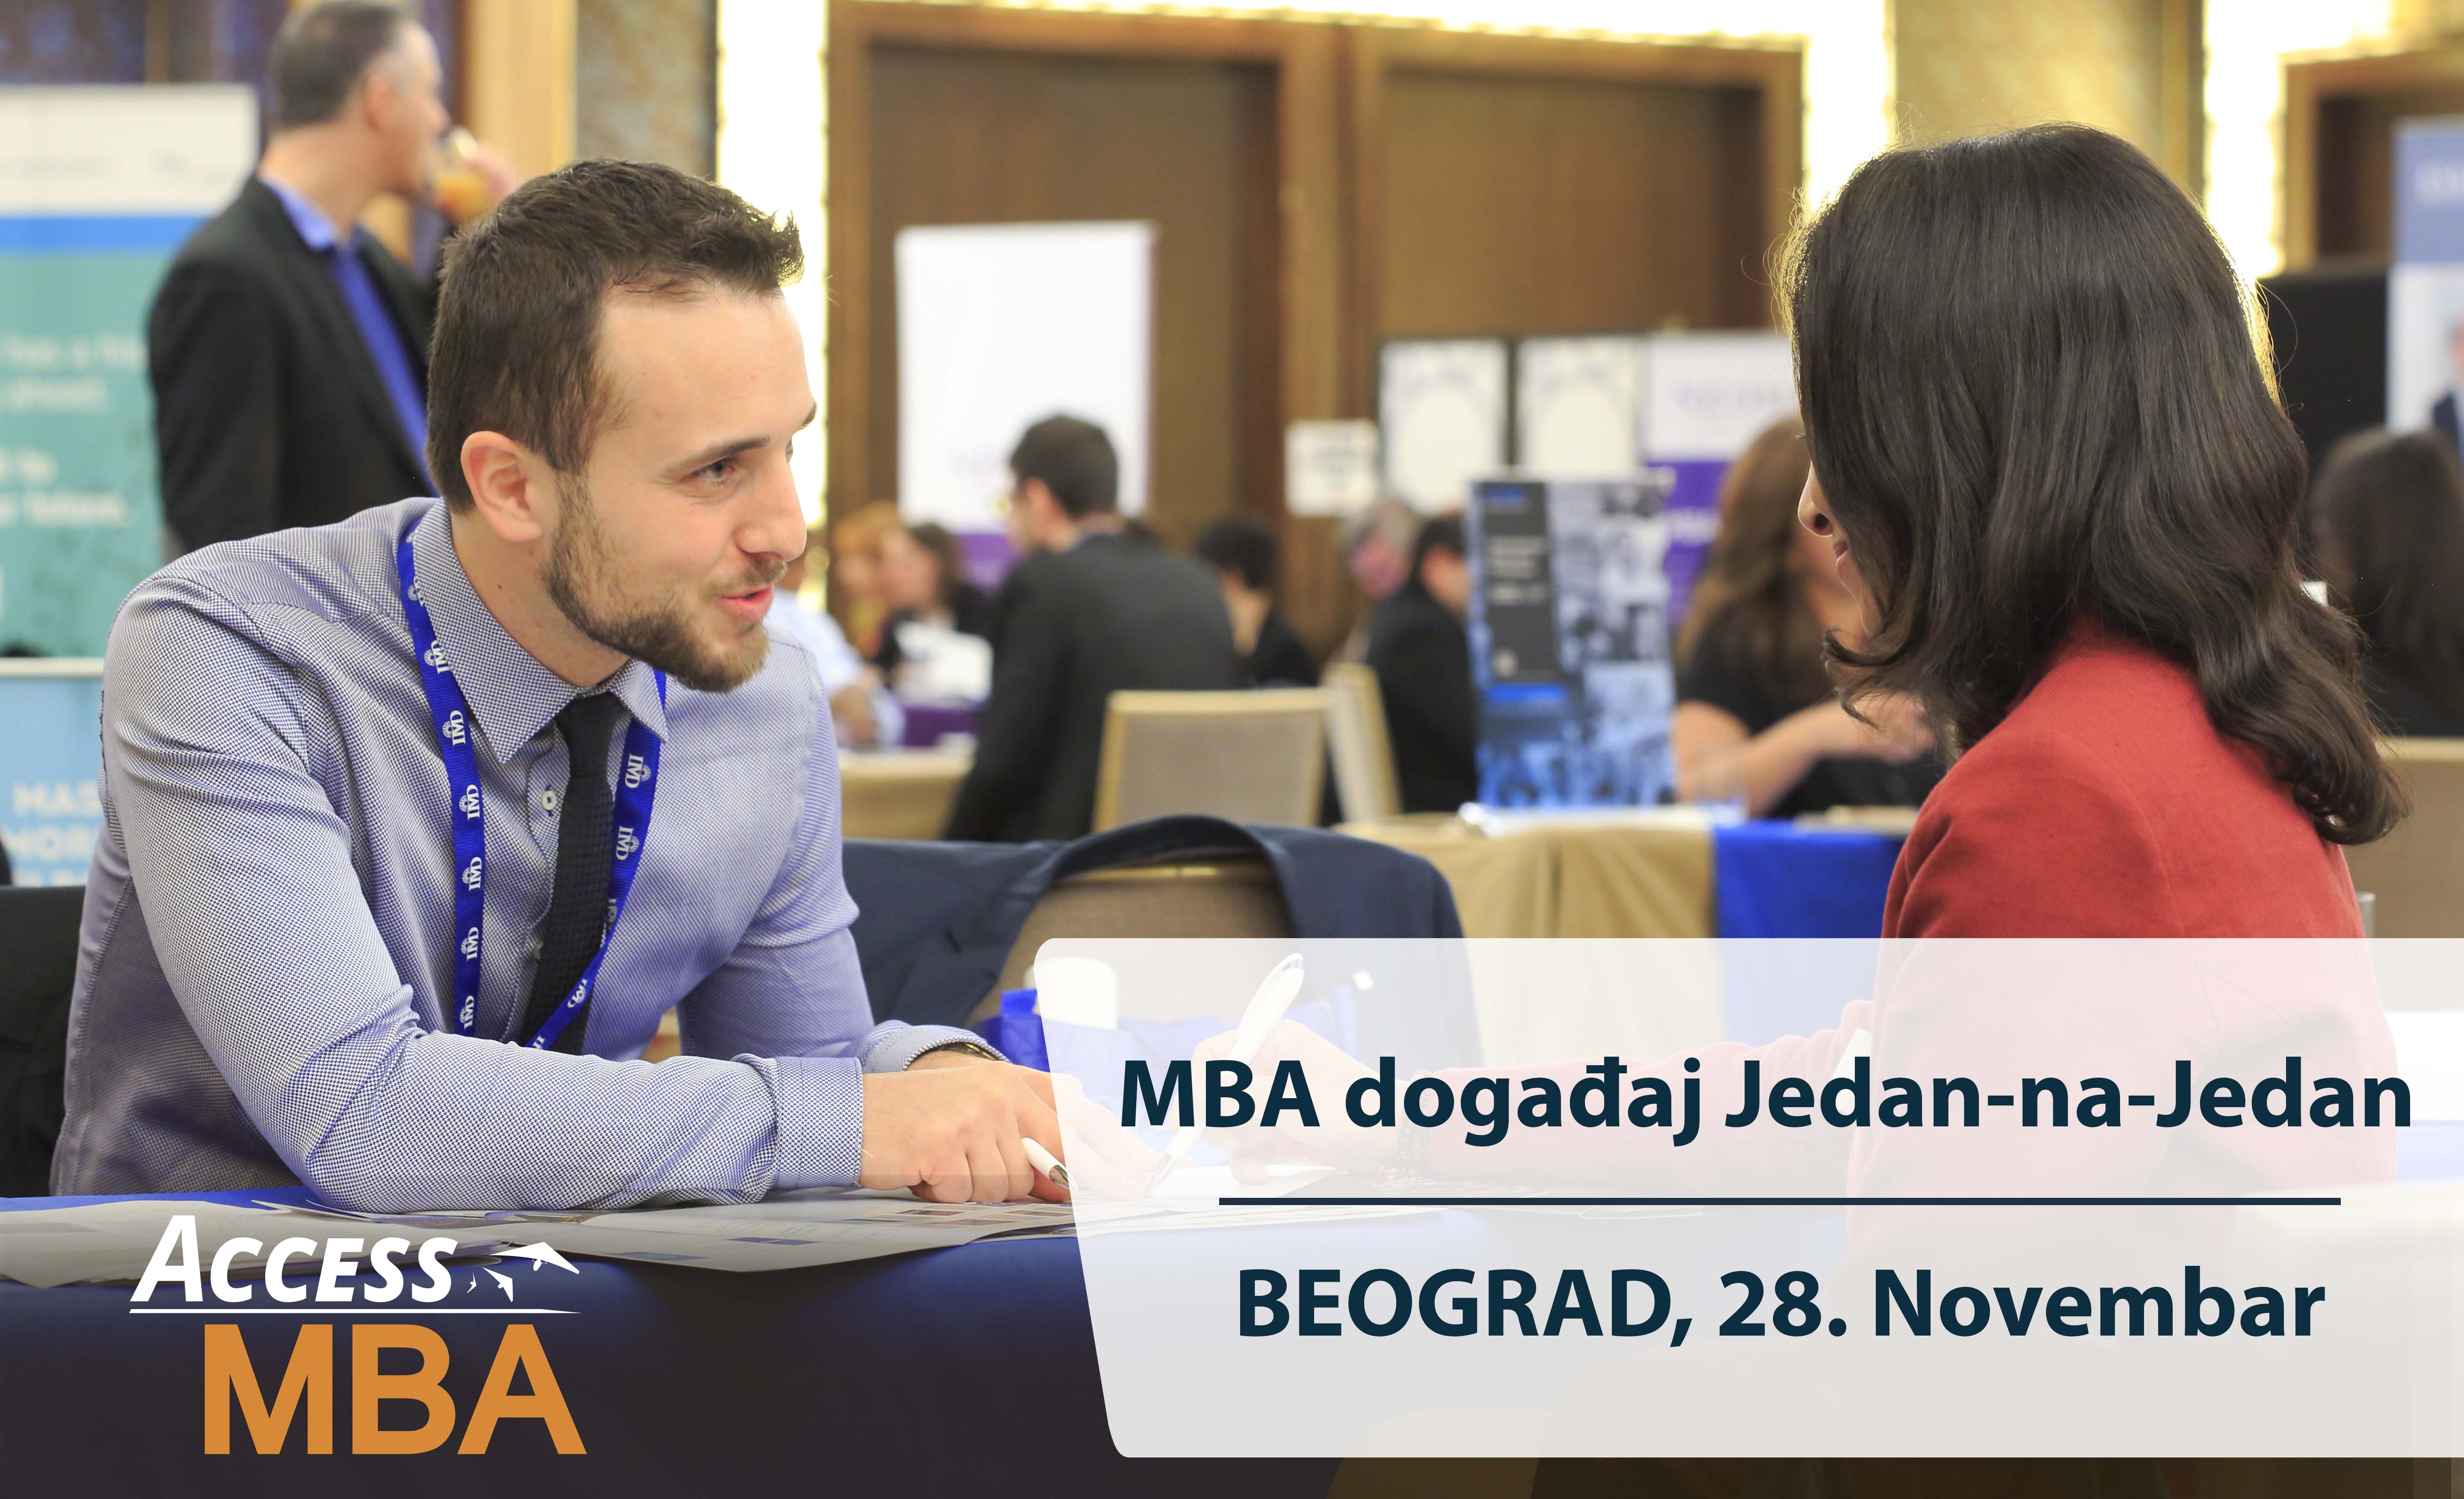 Top International Masters and MBA Events in Belgrade, November 27th-28th, Belgrade, Serbia